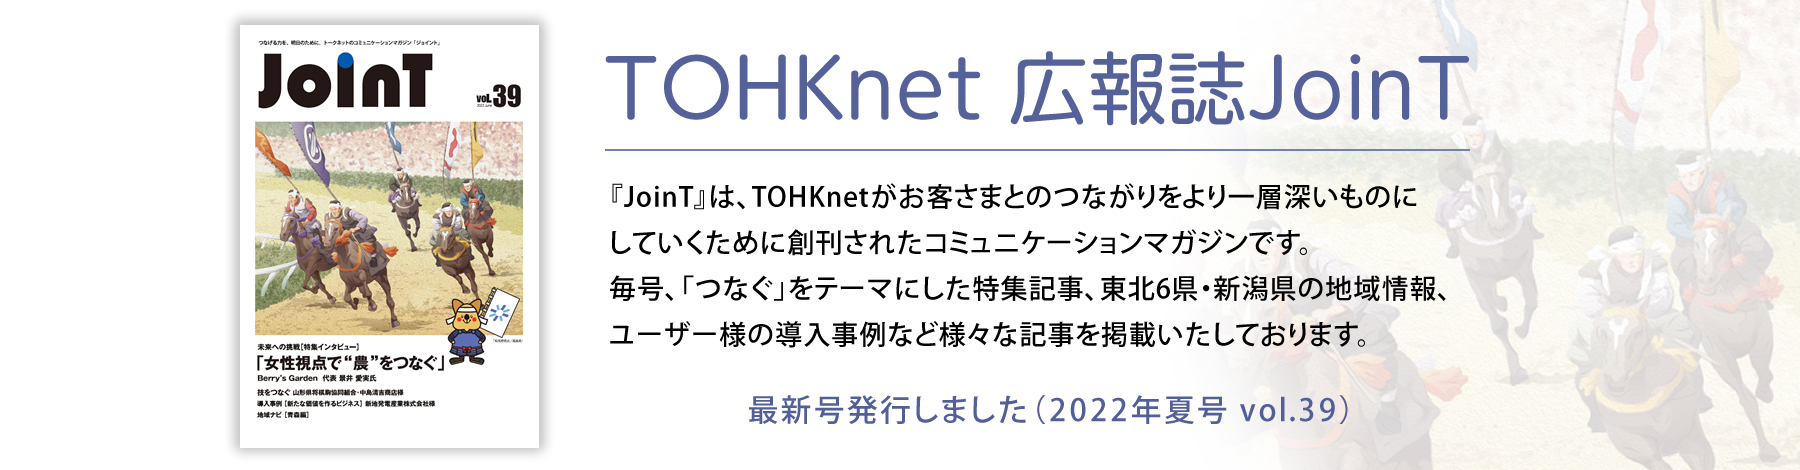 TOHKnet広報誌 JoinT